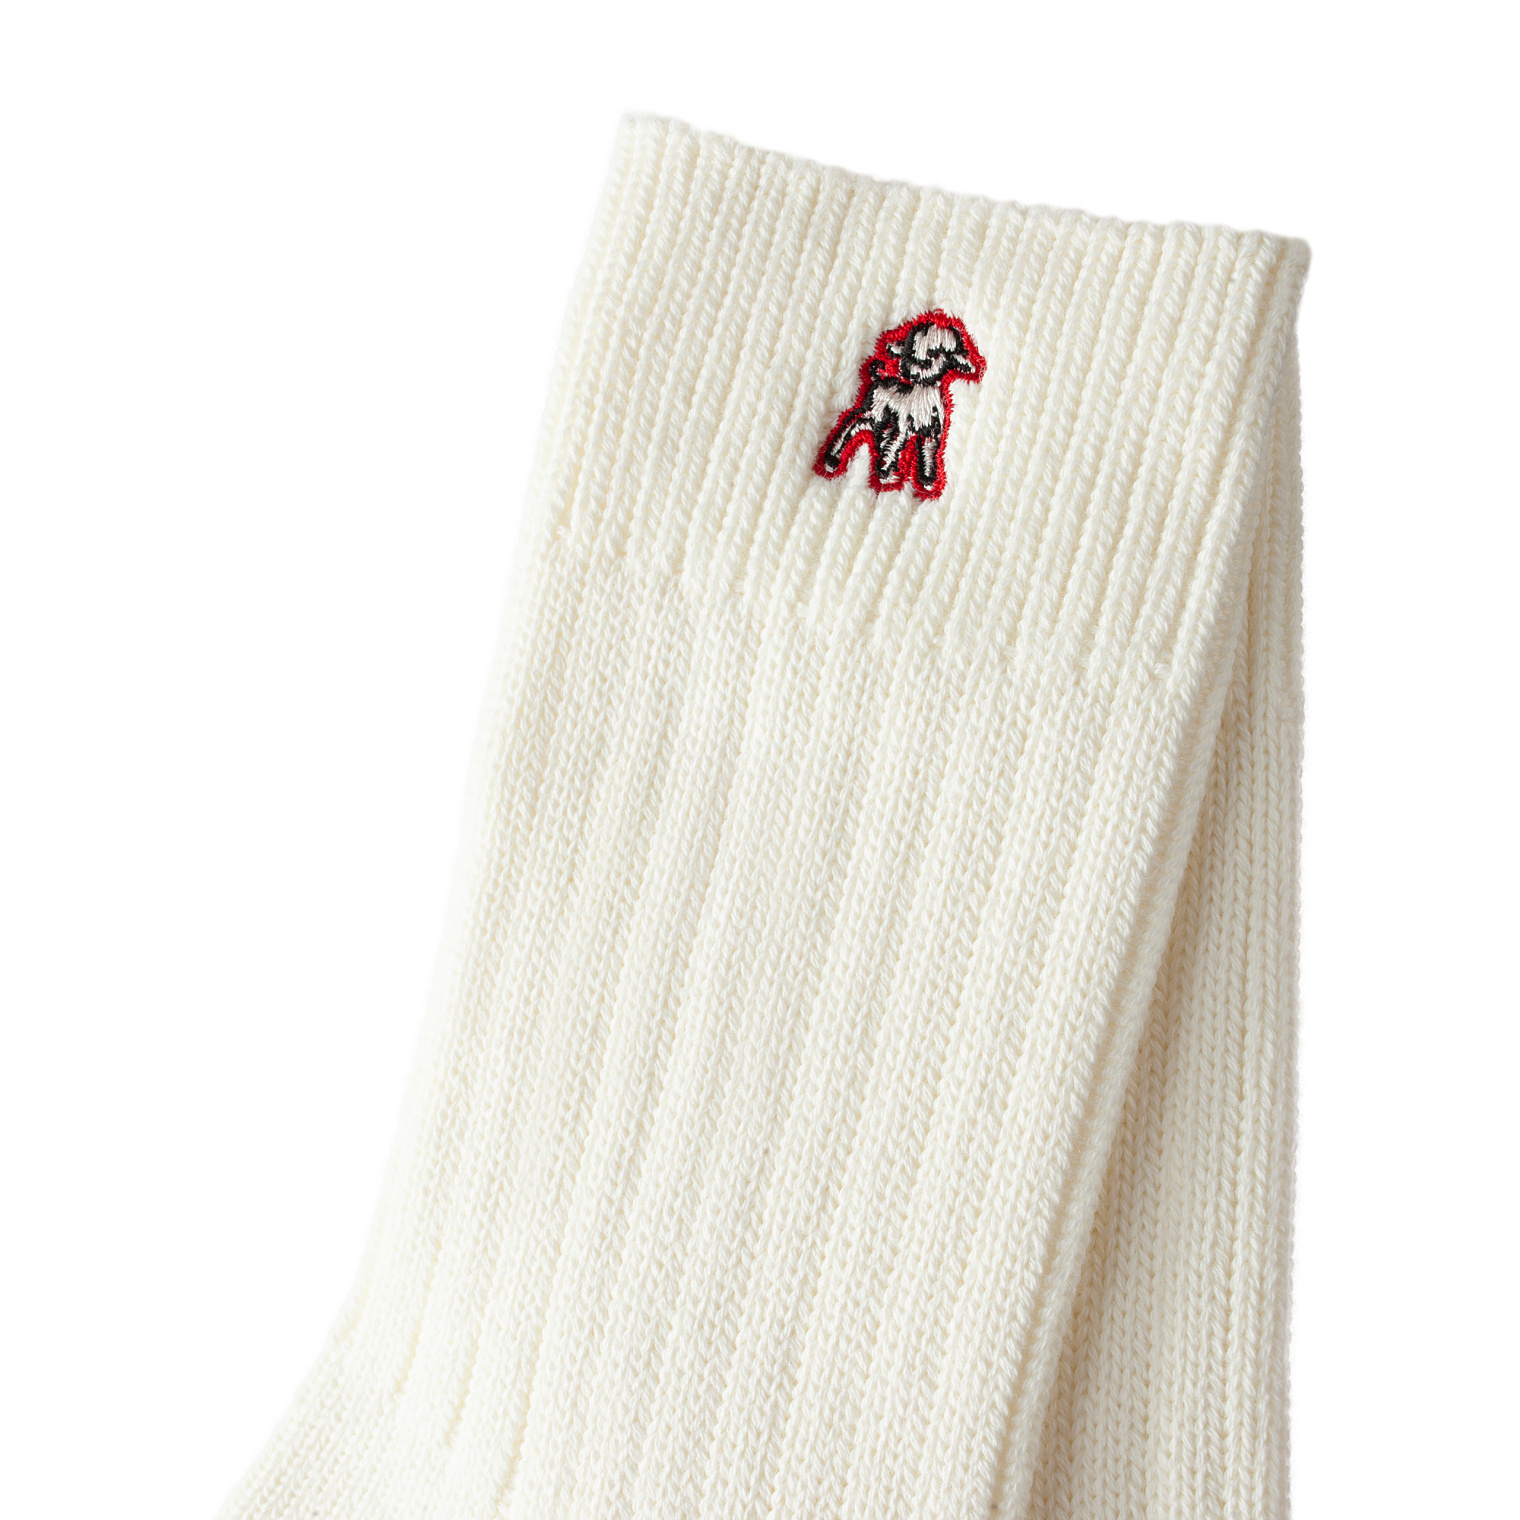 Undercover White embroidered socks